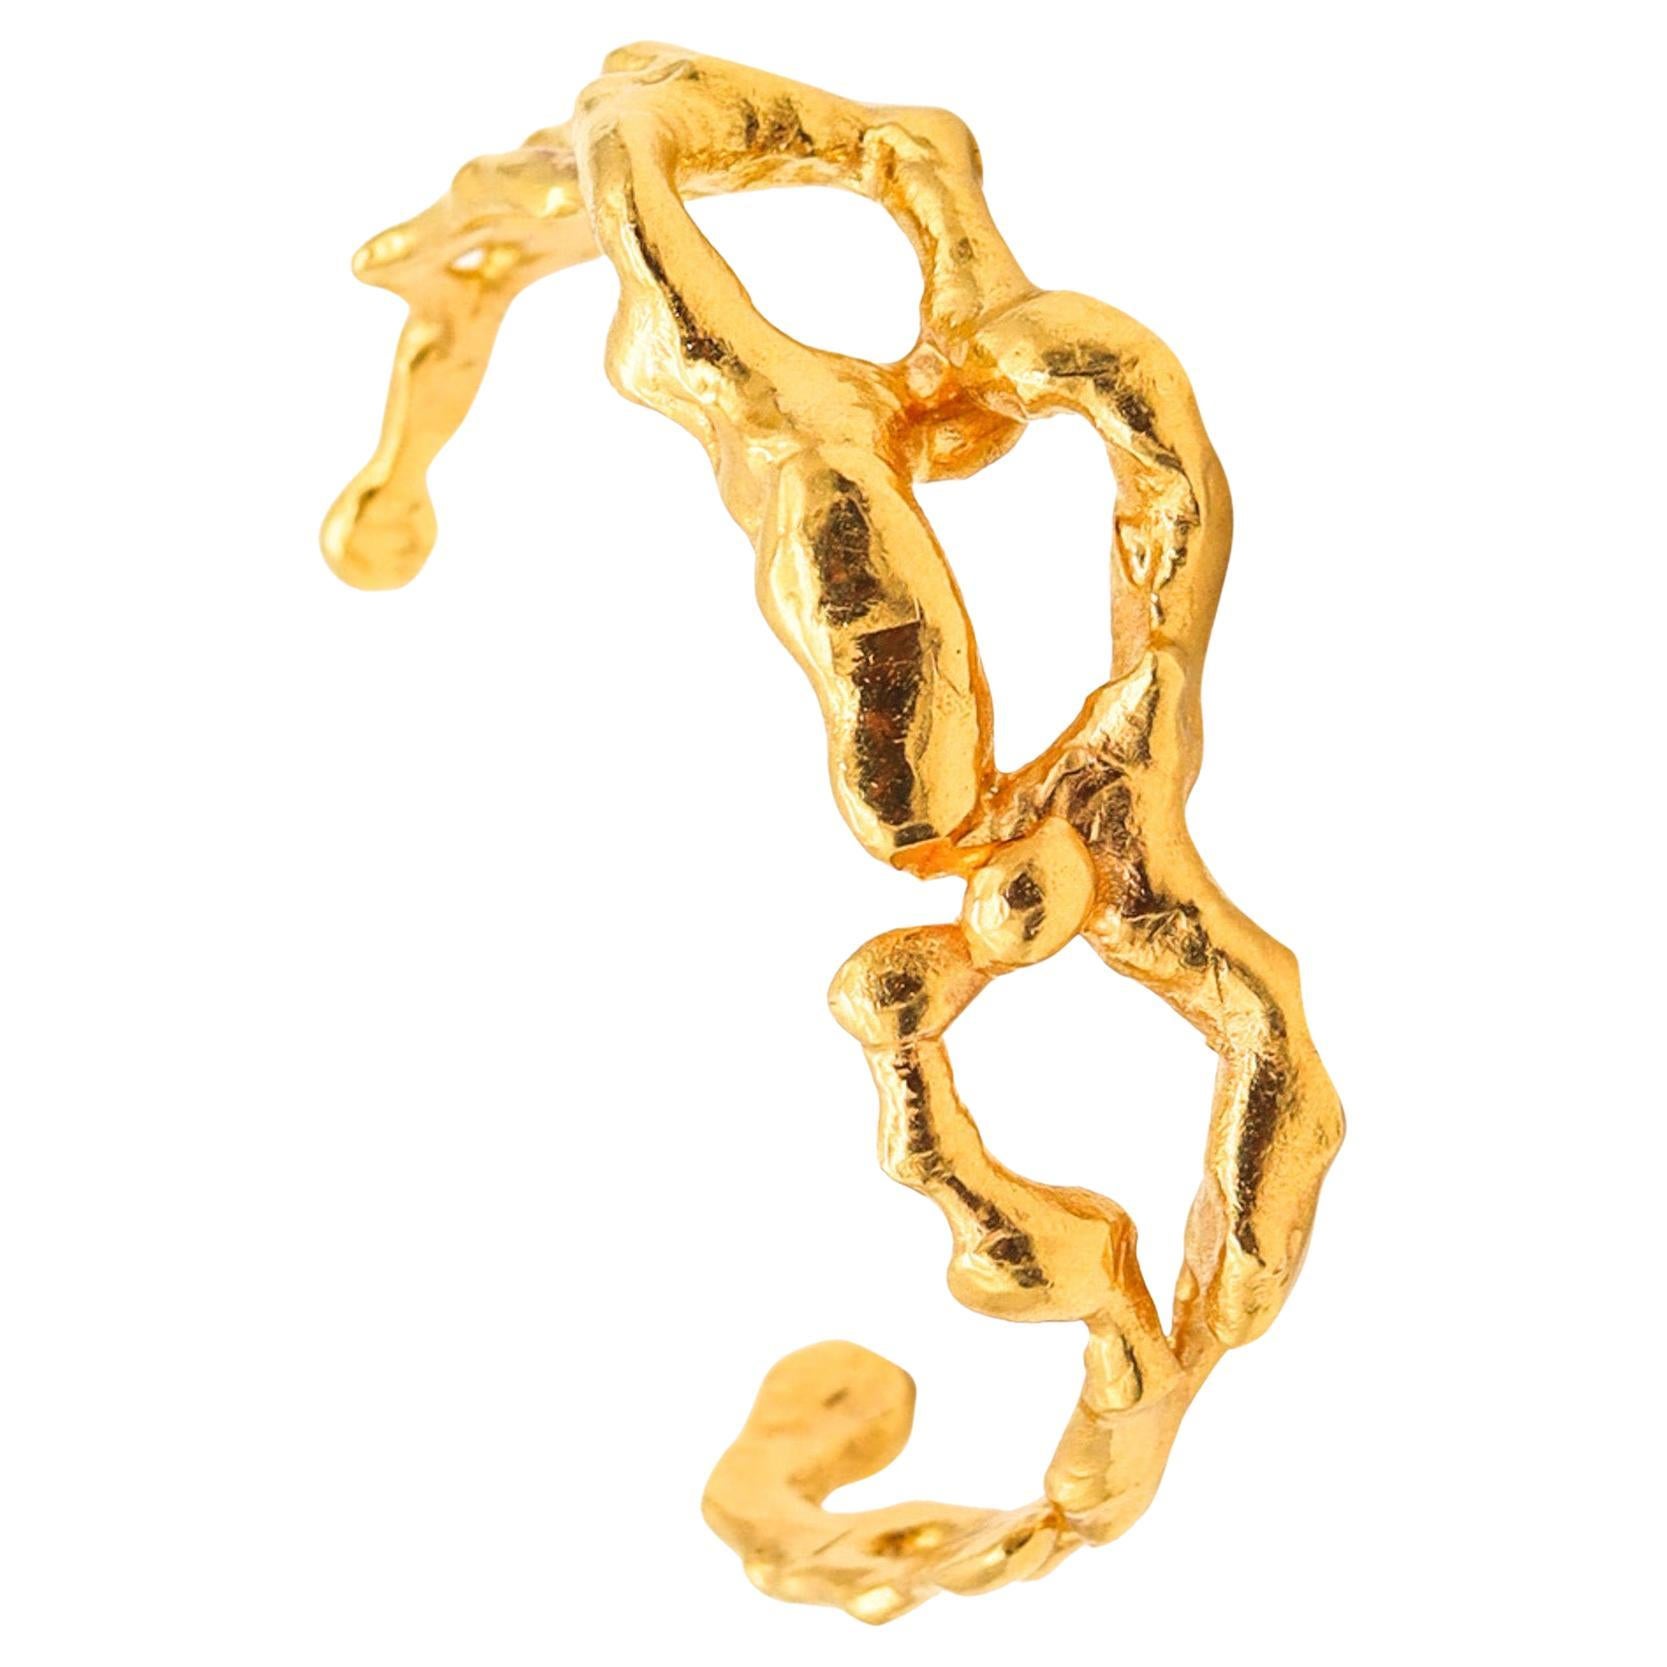 Jean Mahie 1970 Paris Sculptural Cuff Bracelet In Solid 22Kt Yellow Gold